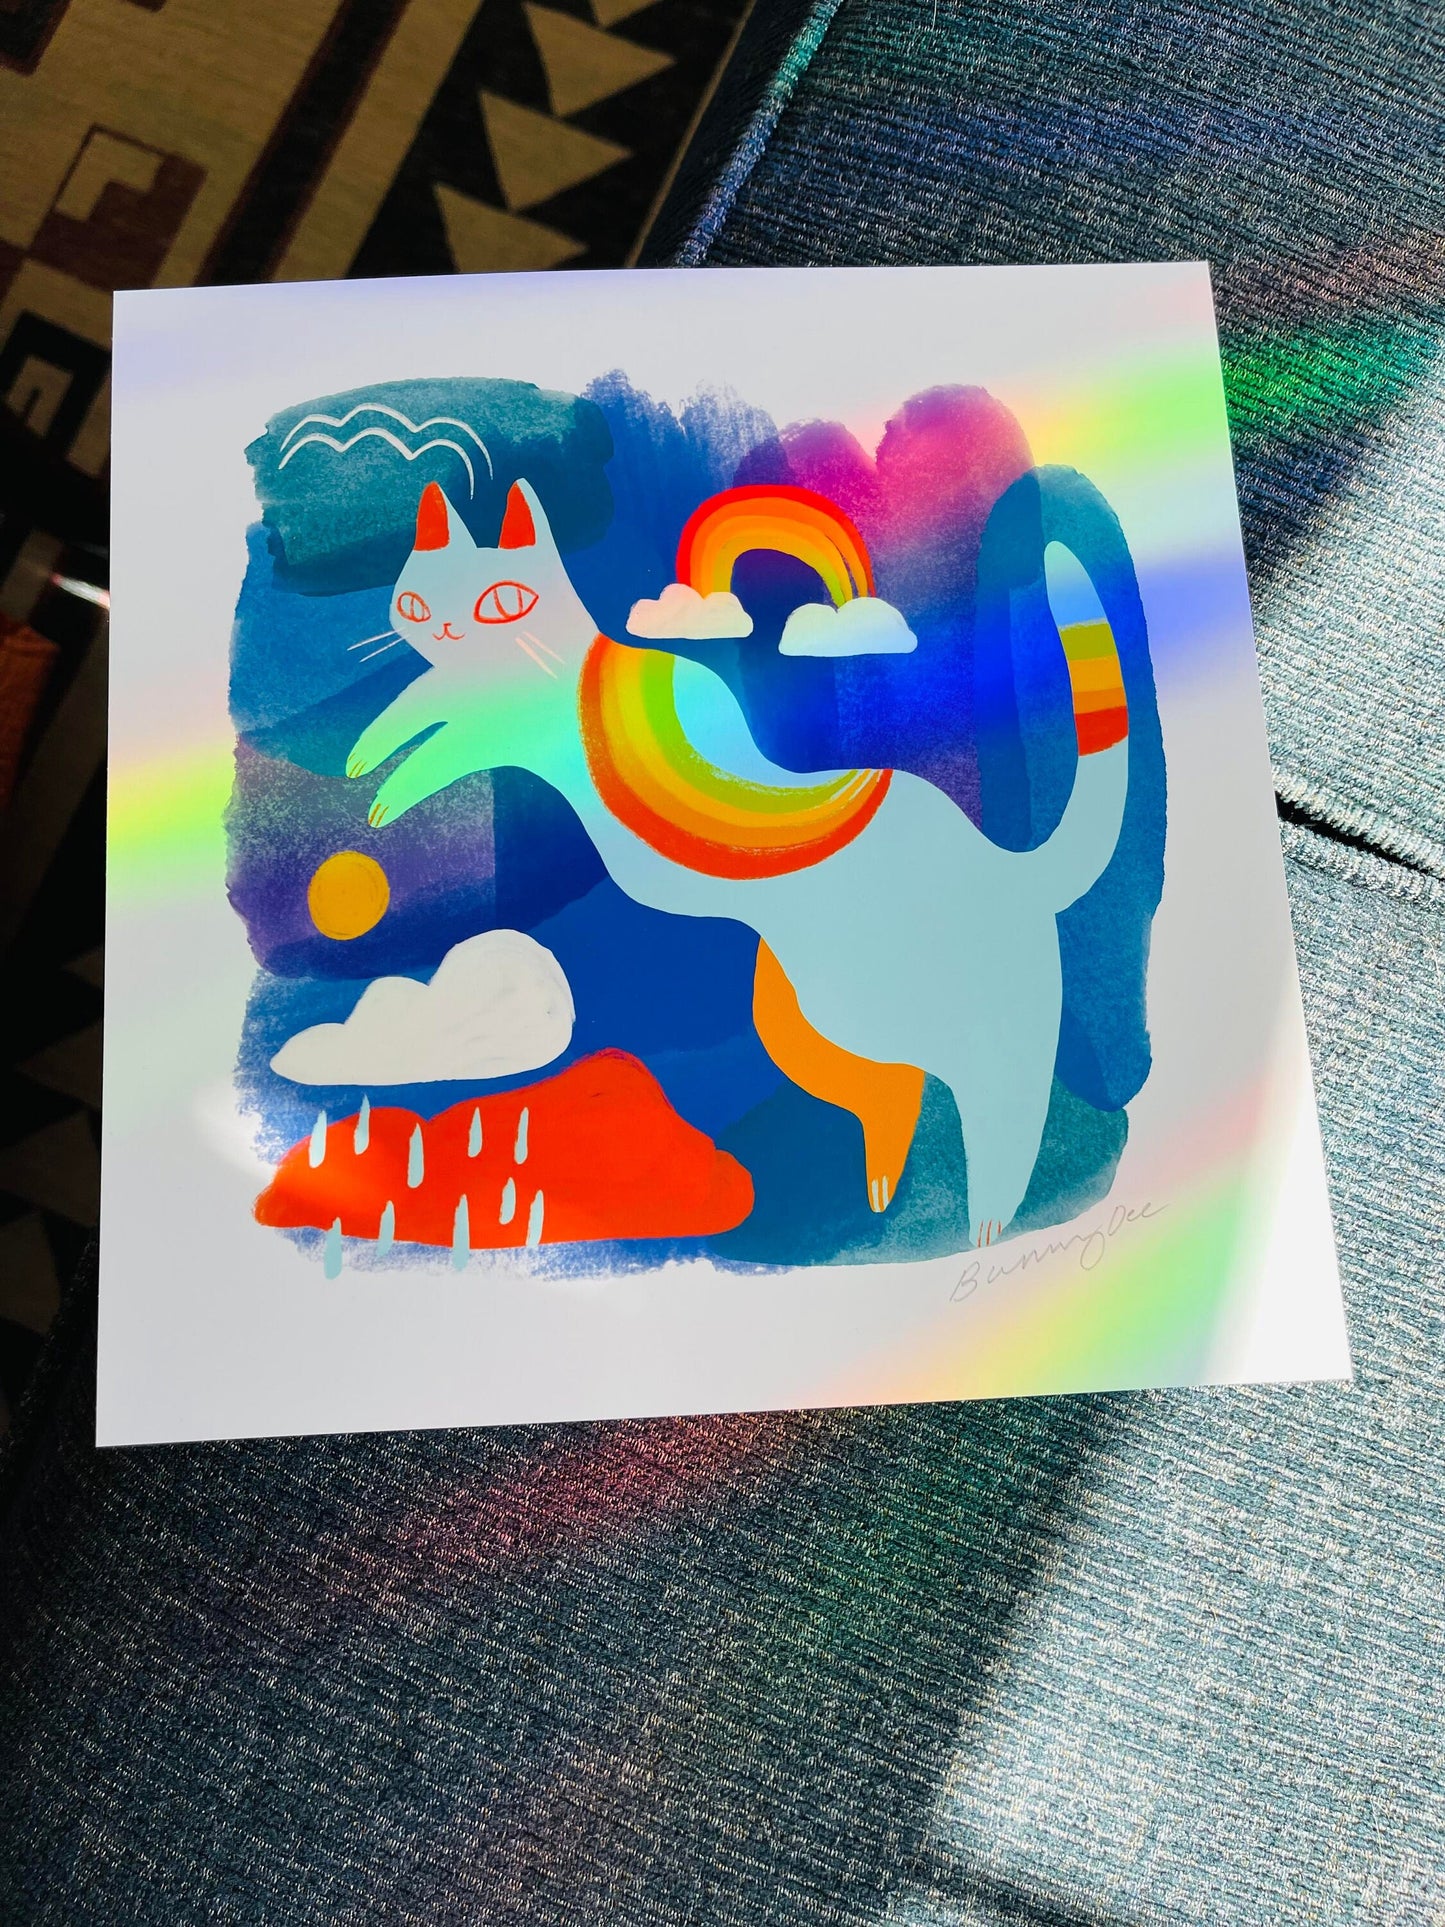 The rainbow cat 8x8 inch prints